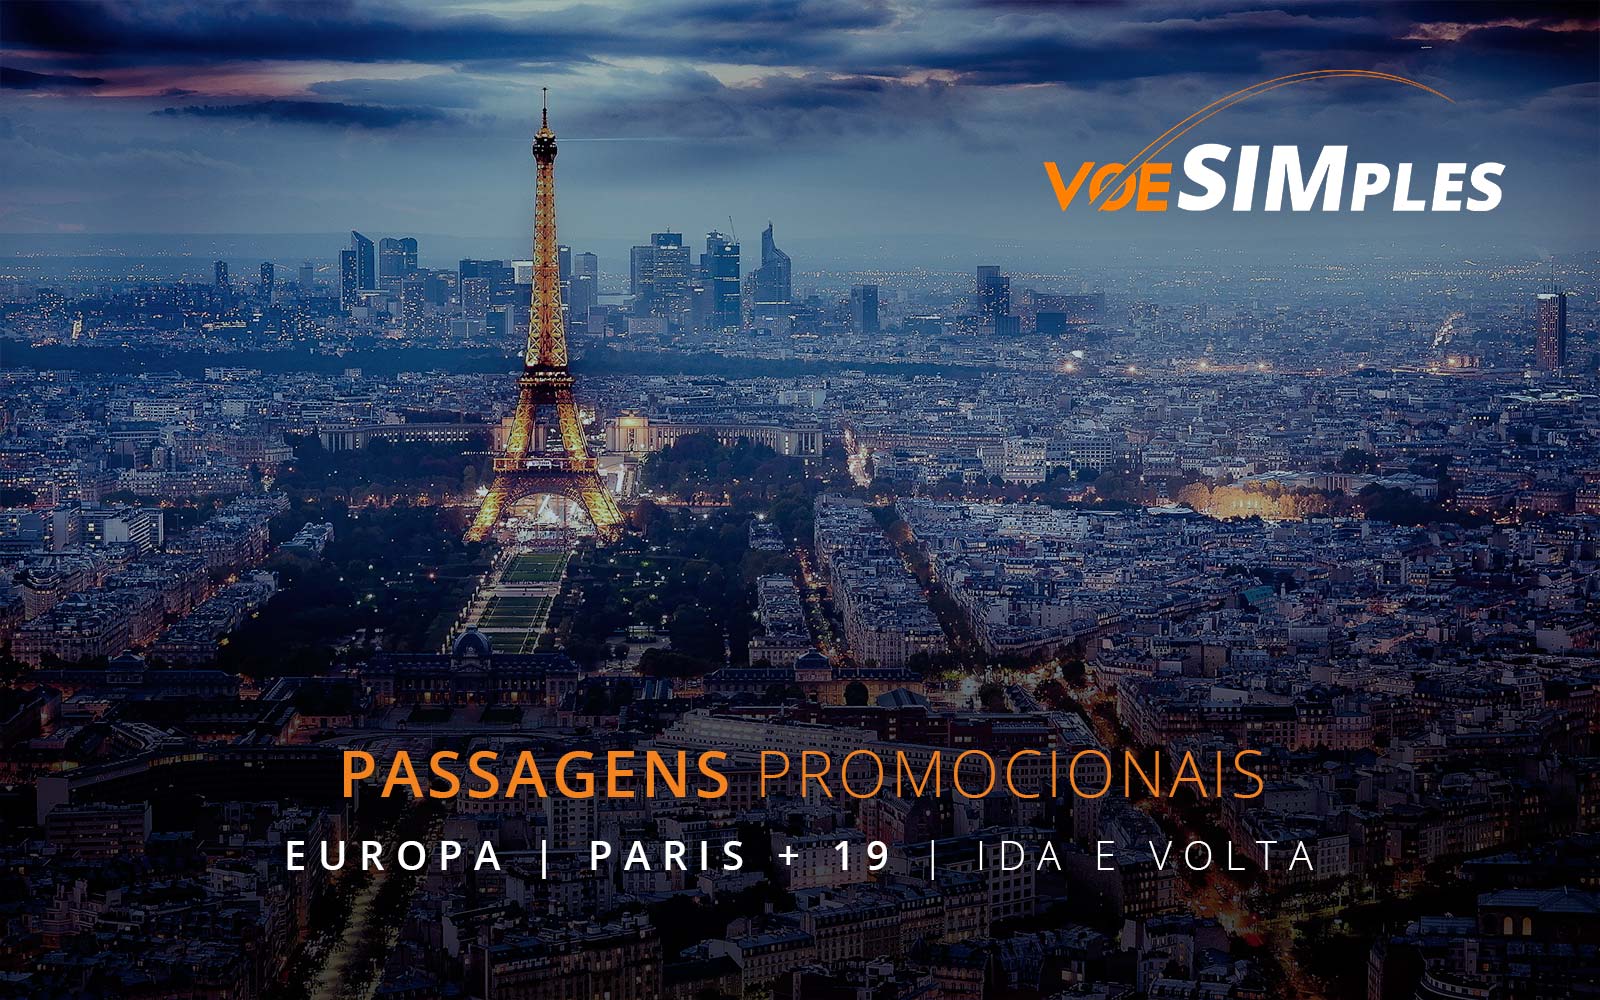 Passagens aéreas promocionais para Barcelona, Paris, Londres, Roma e Veneza na Europa